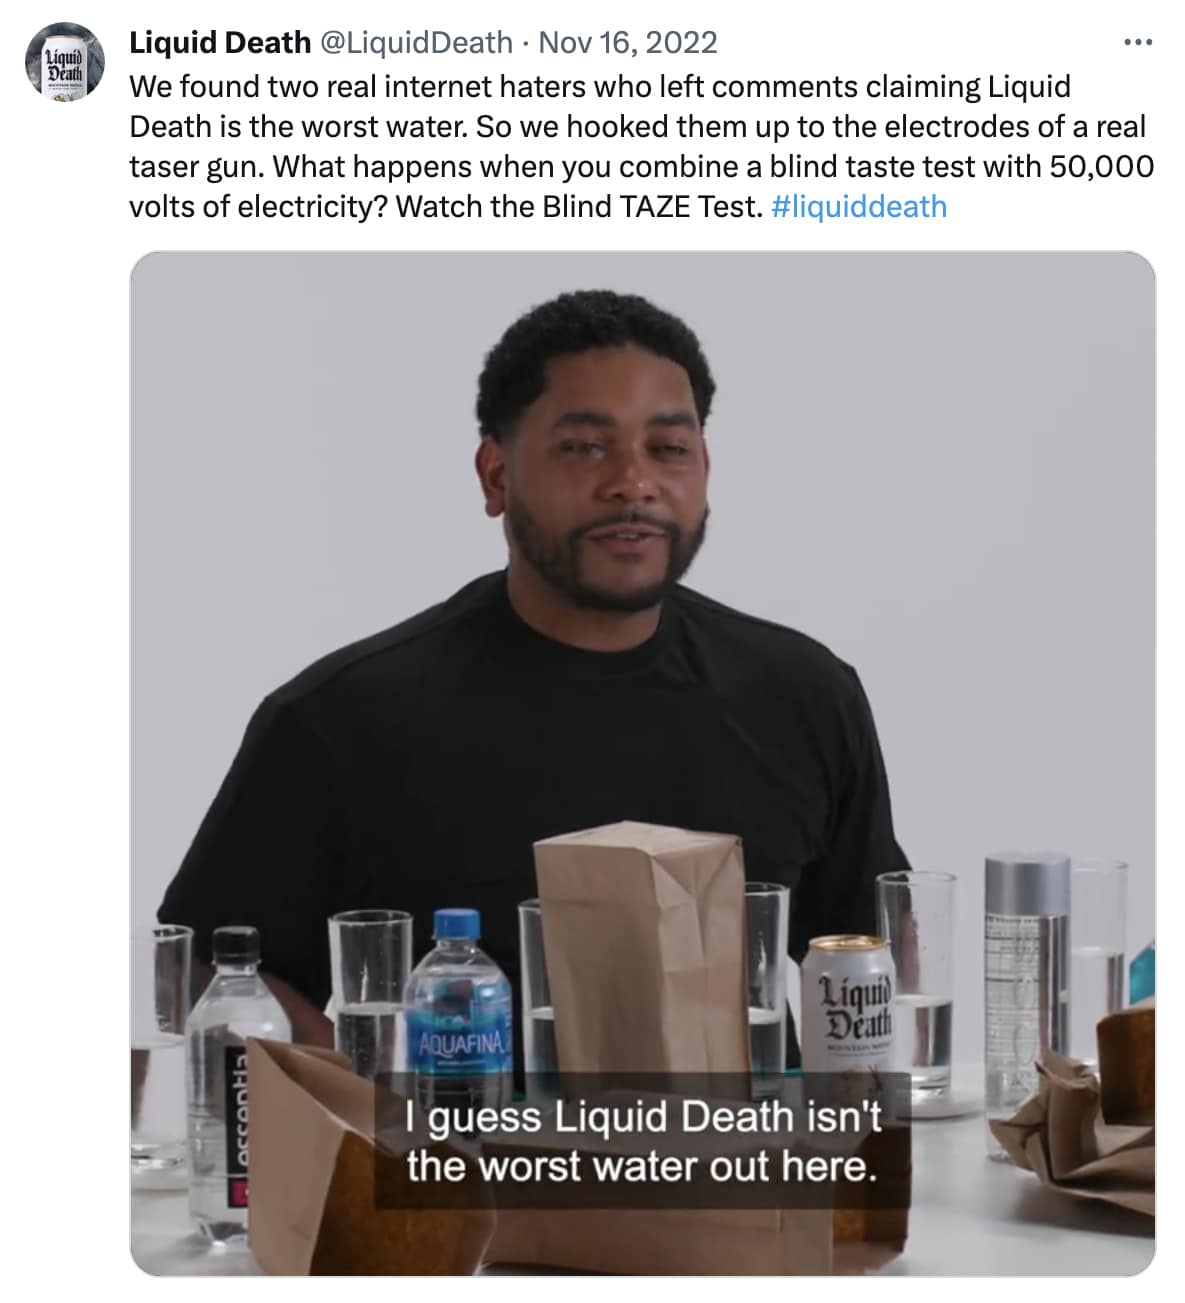 food and beverage marketing example - Liquid Death - Twitter